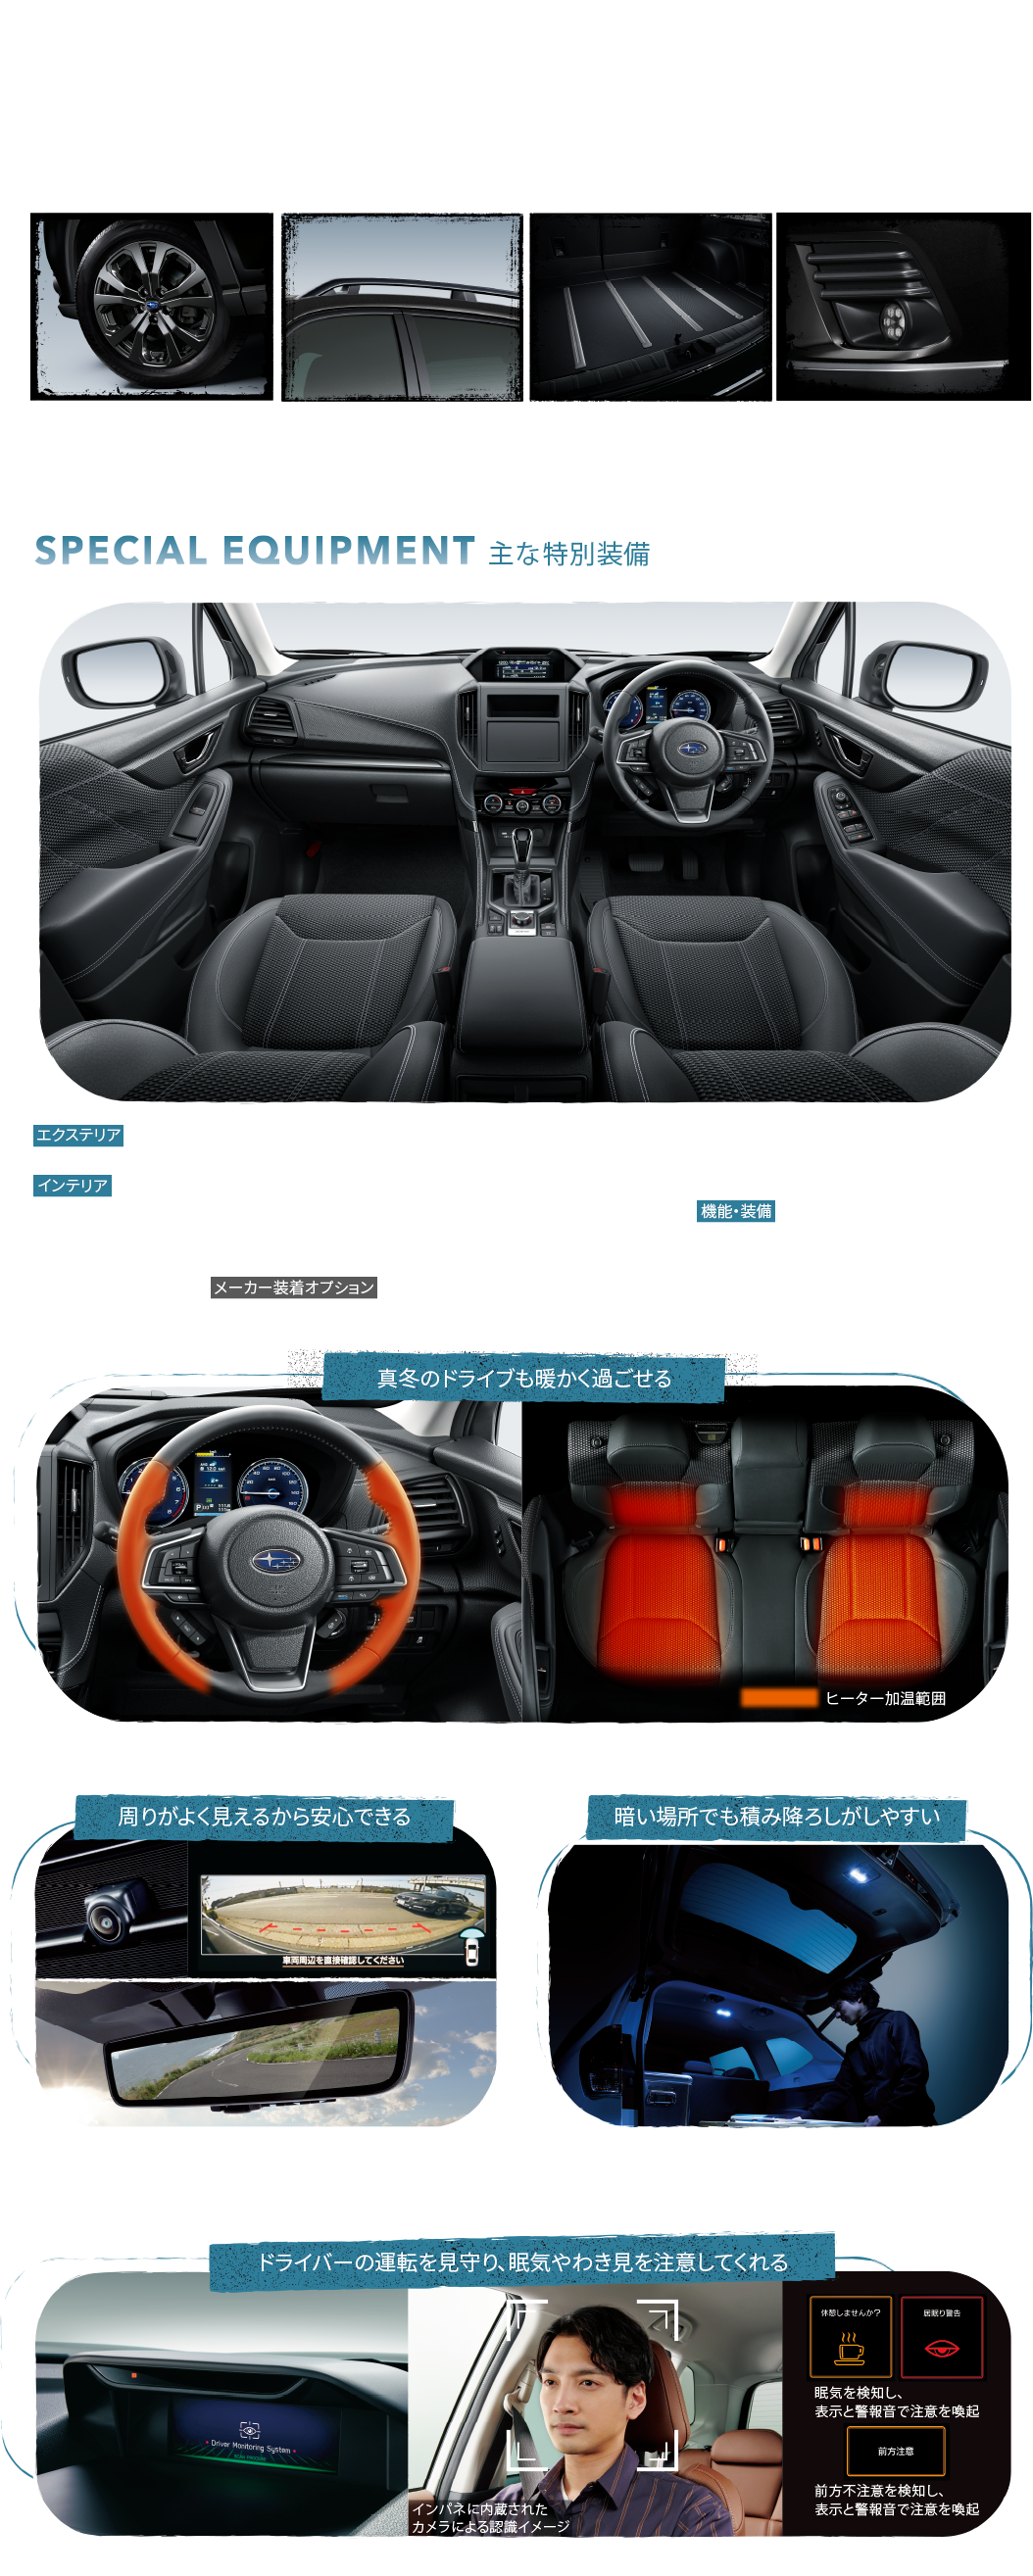 2.0L DOHC 直噴+モーター（e-BOXER）リニアトロニック　AWD（常時全輪駆動）メーカー希望小売価格（消費税10%込）3,377,000円消費税抜き価格　3,070,000円